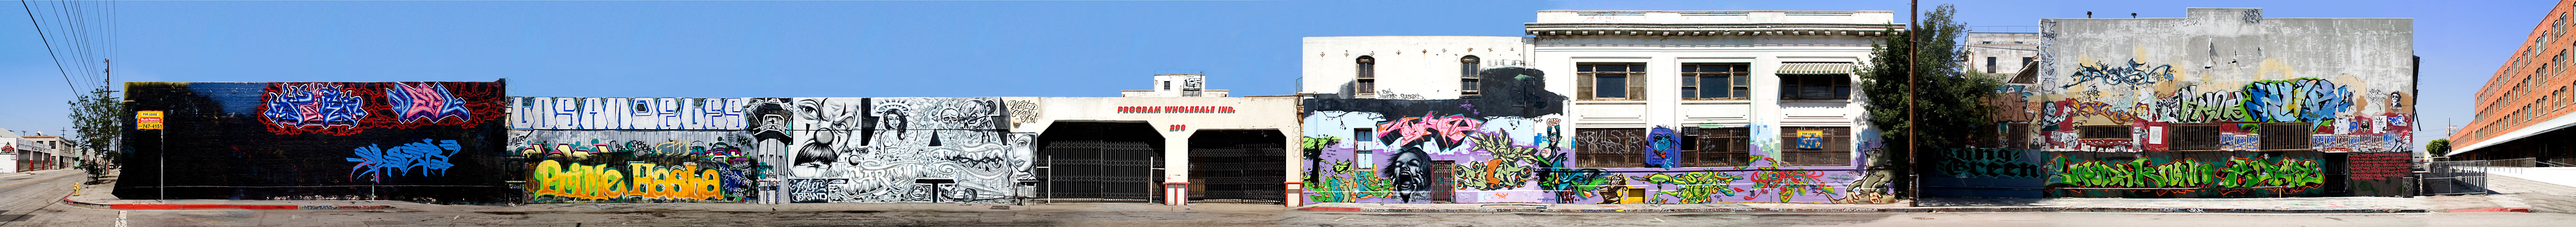 Garey Street, Los Angeles, 2007